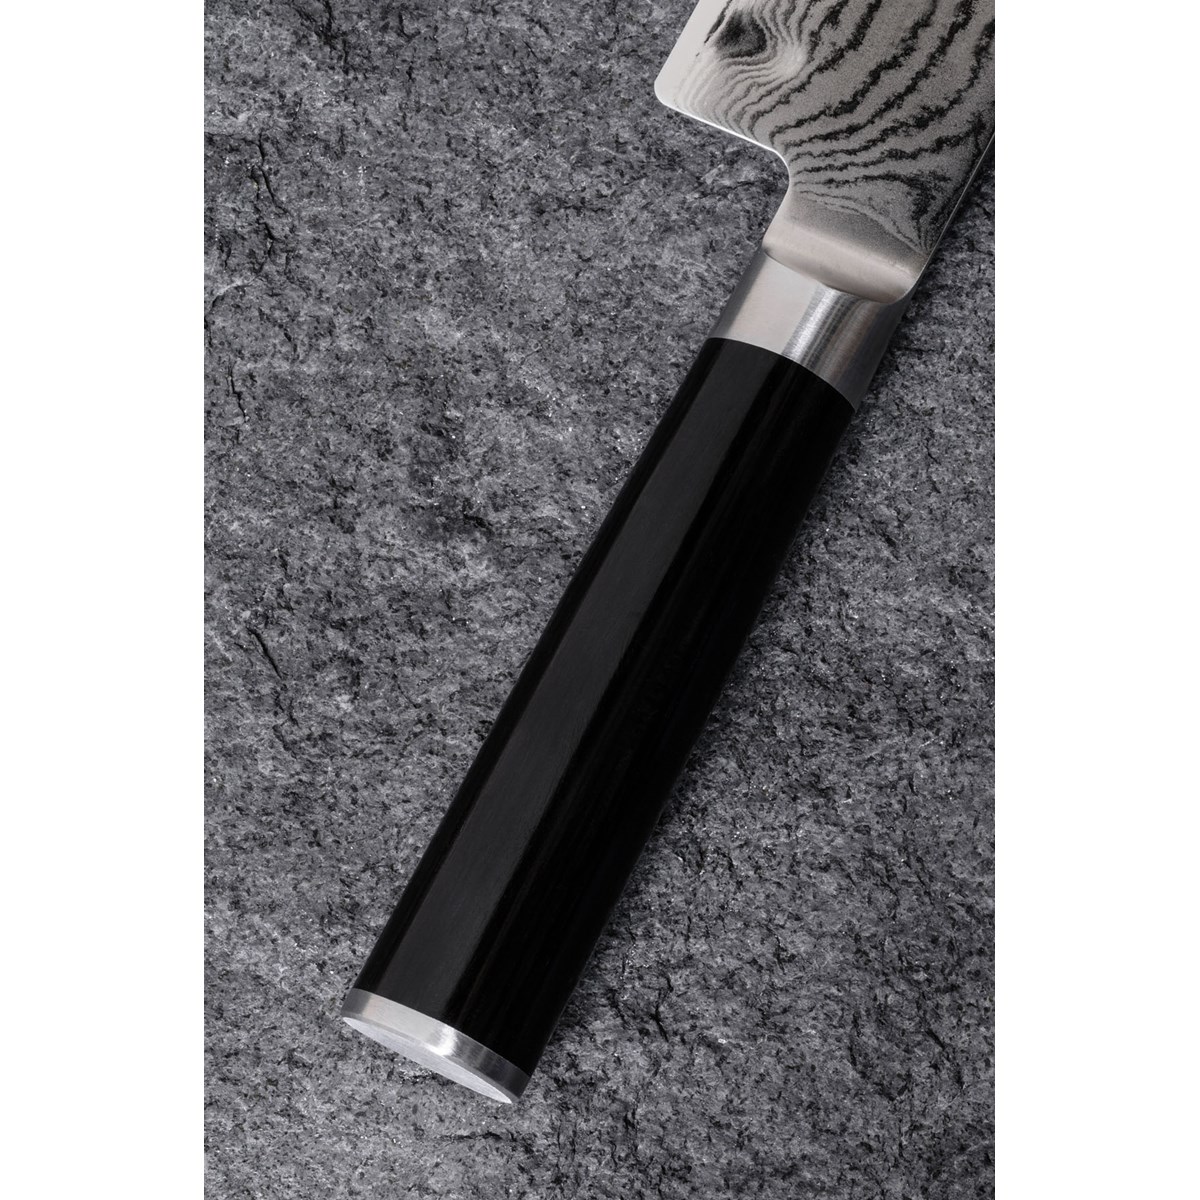 KAI, Shun Classic fileteringskniv 18cm